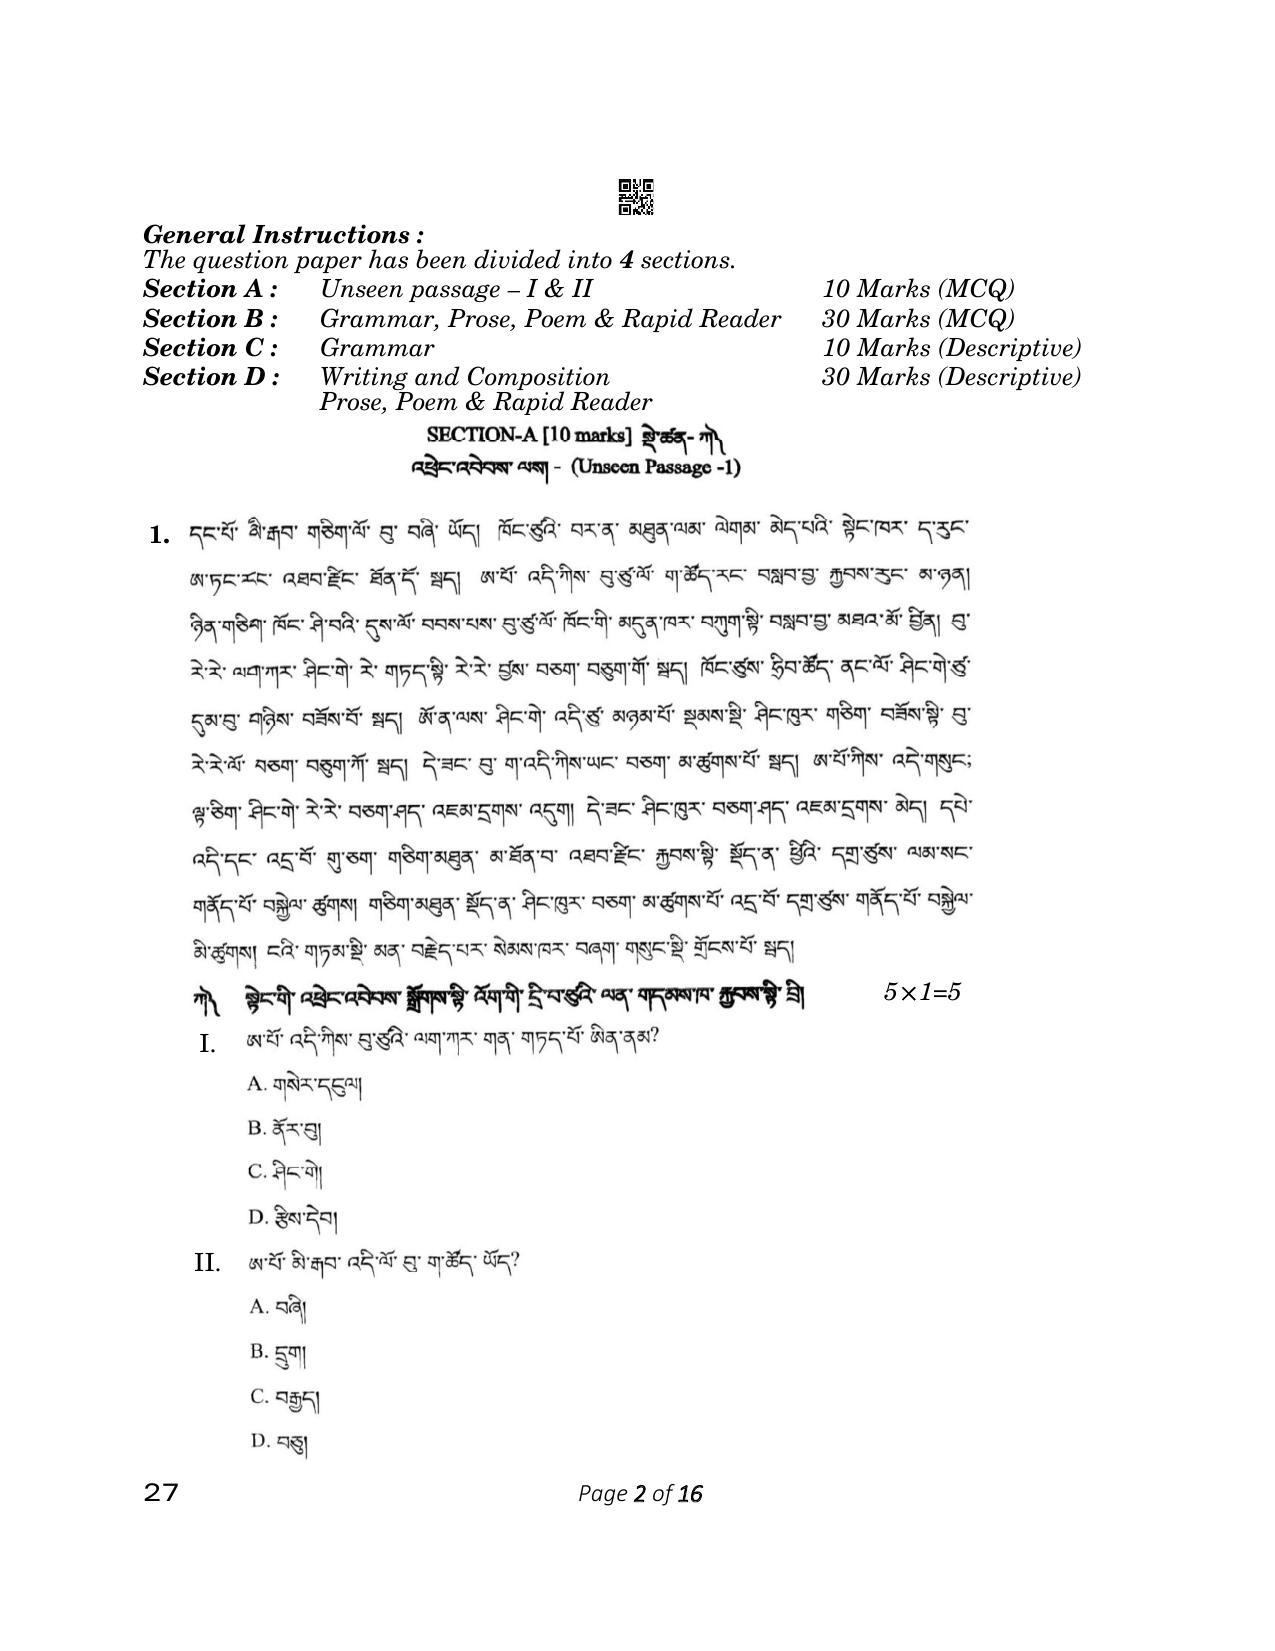 CBSE Class 12 27_Bhutia 2023 2023 Question Paper - Page 2